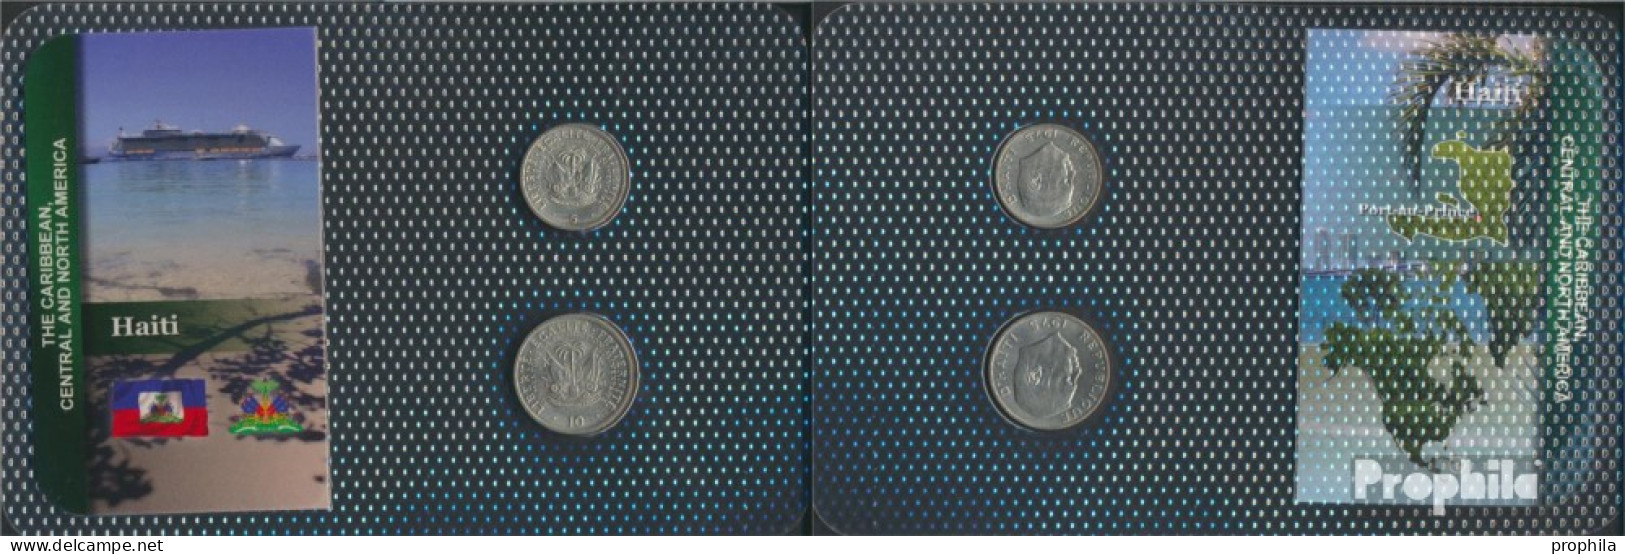 Haiti 1975 Stgl./unzirkuliert Kursmünzen Stgl./unzirkuliert 1975 5 Centimes Bis 10 Centimes - Haití